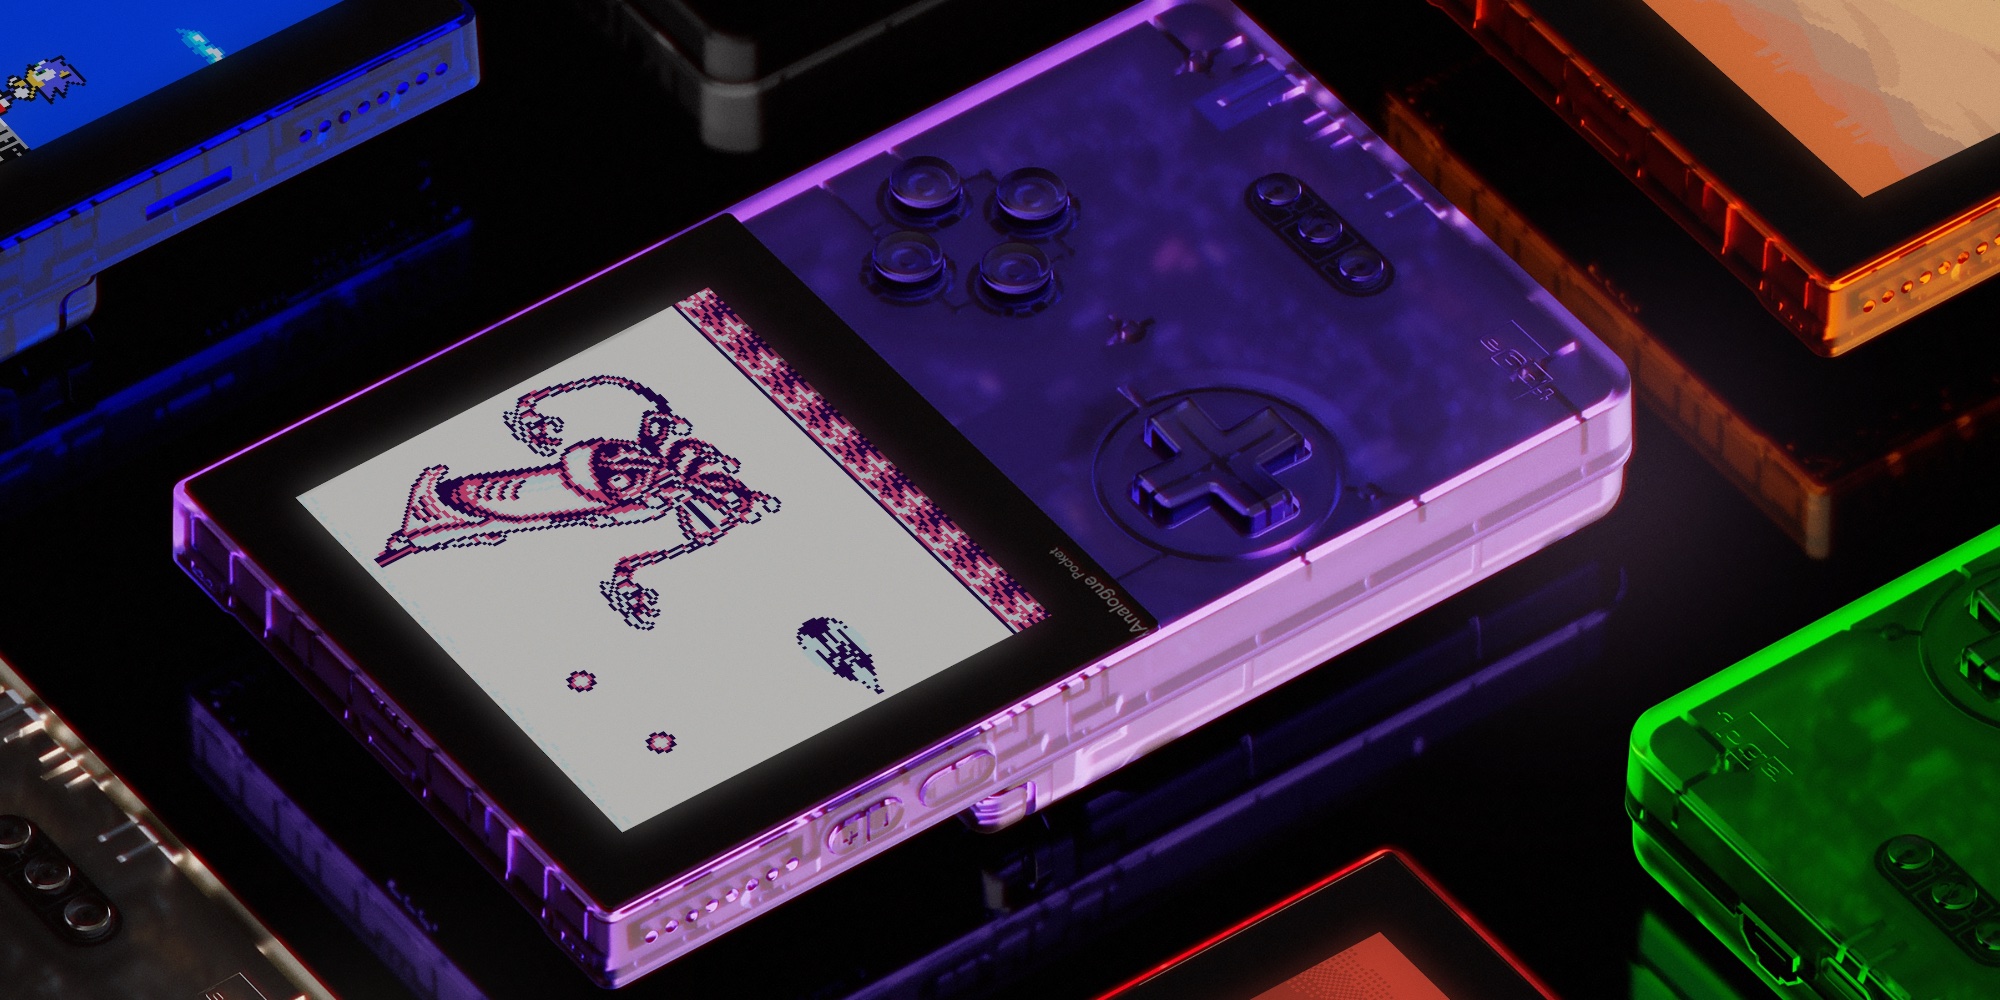 Analogue Pocket transparent Game Boy handheld coming soon